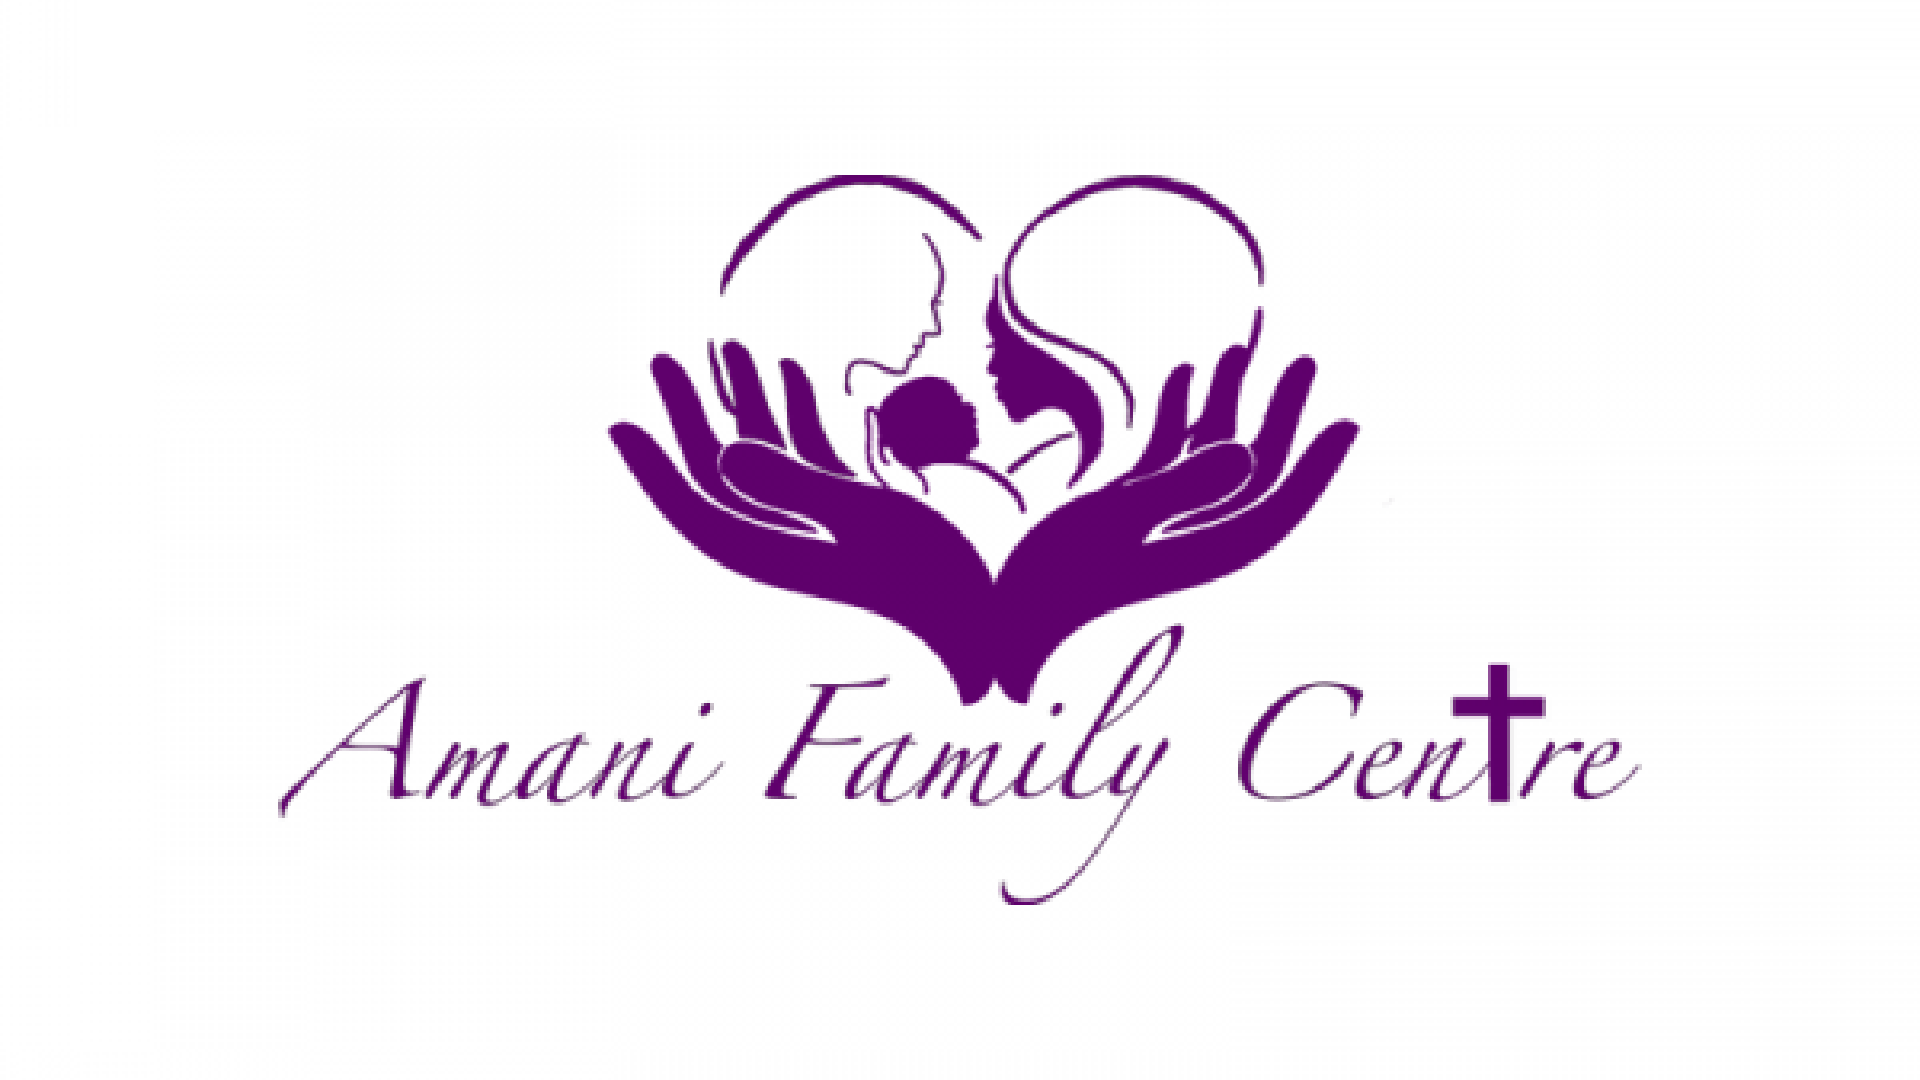 Amani Family Centre logo